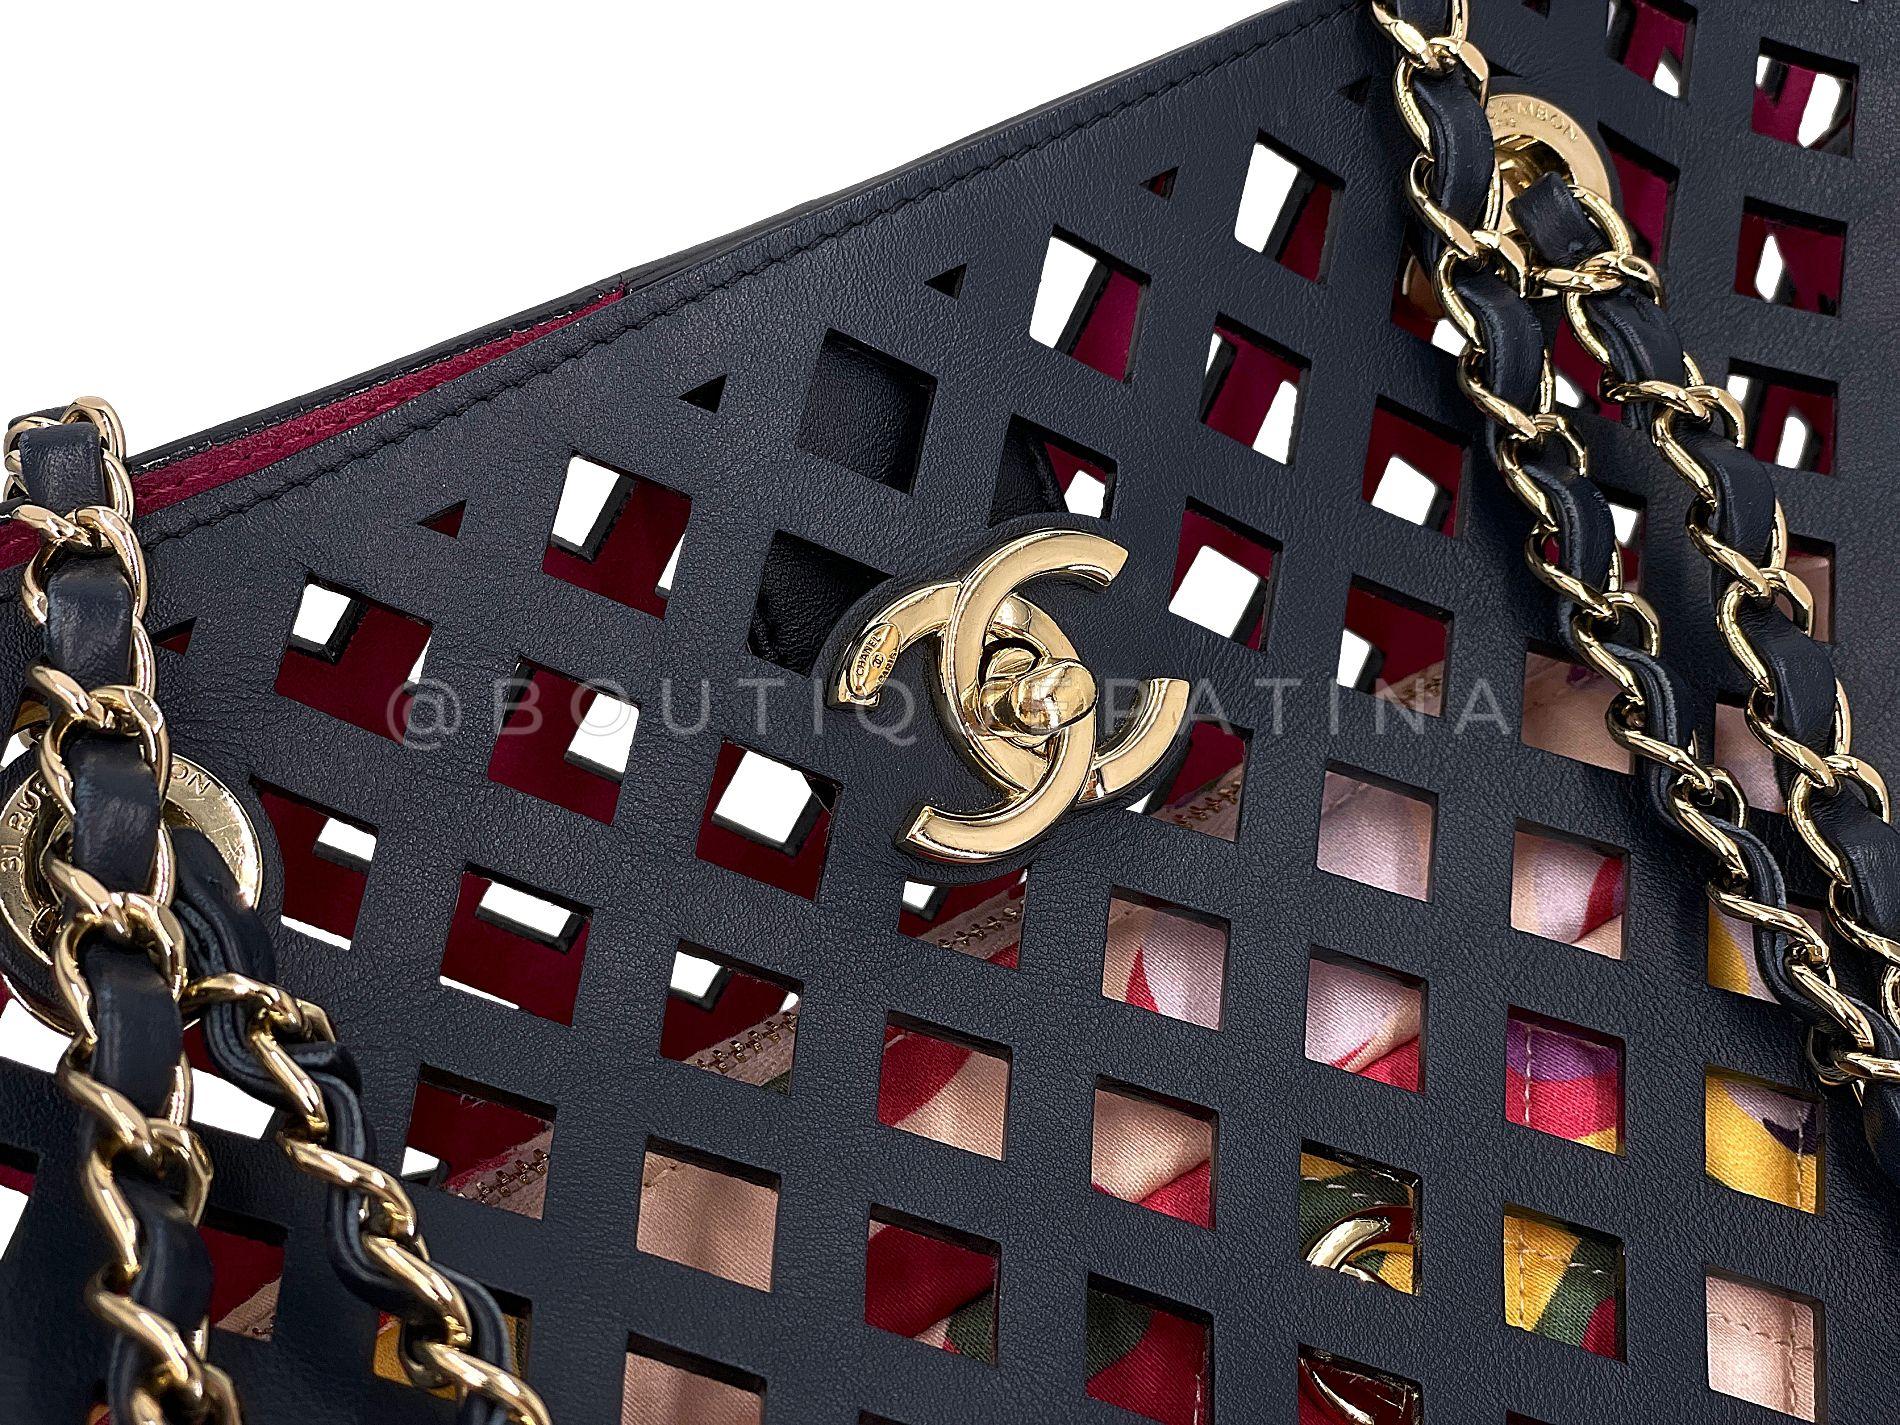 Chanel Black Fuchsia Pink Diamond Cutout Shopper Tote Bag 67861 For Sale 6